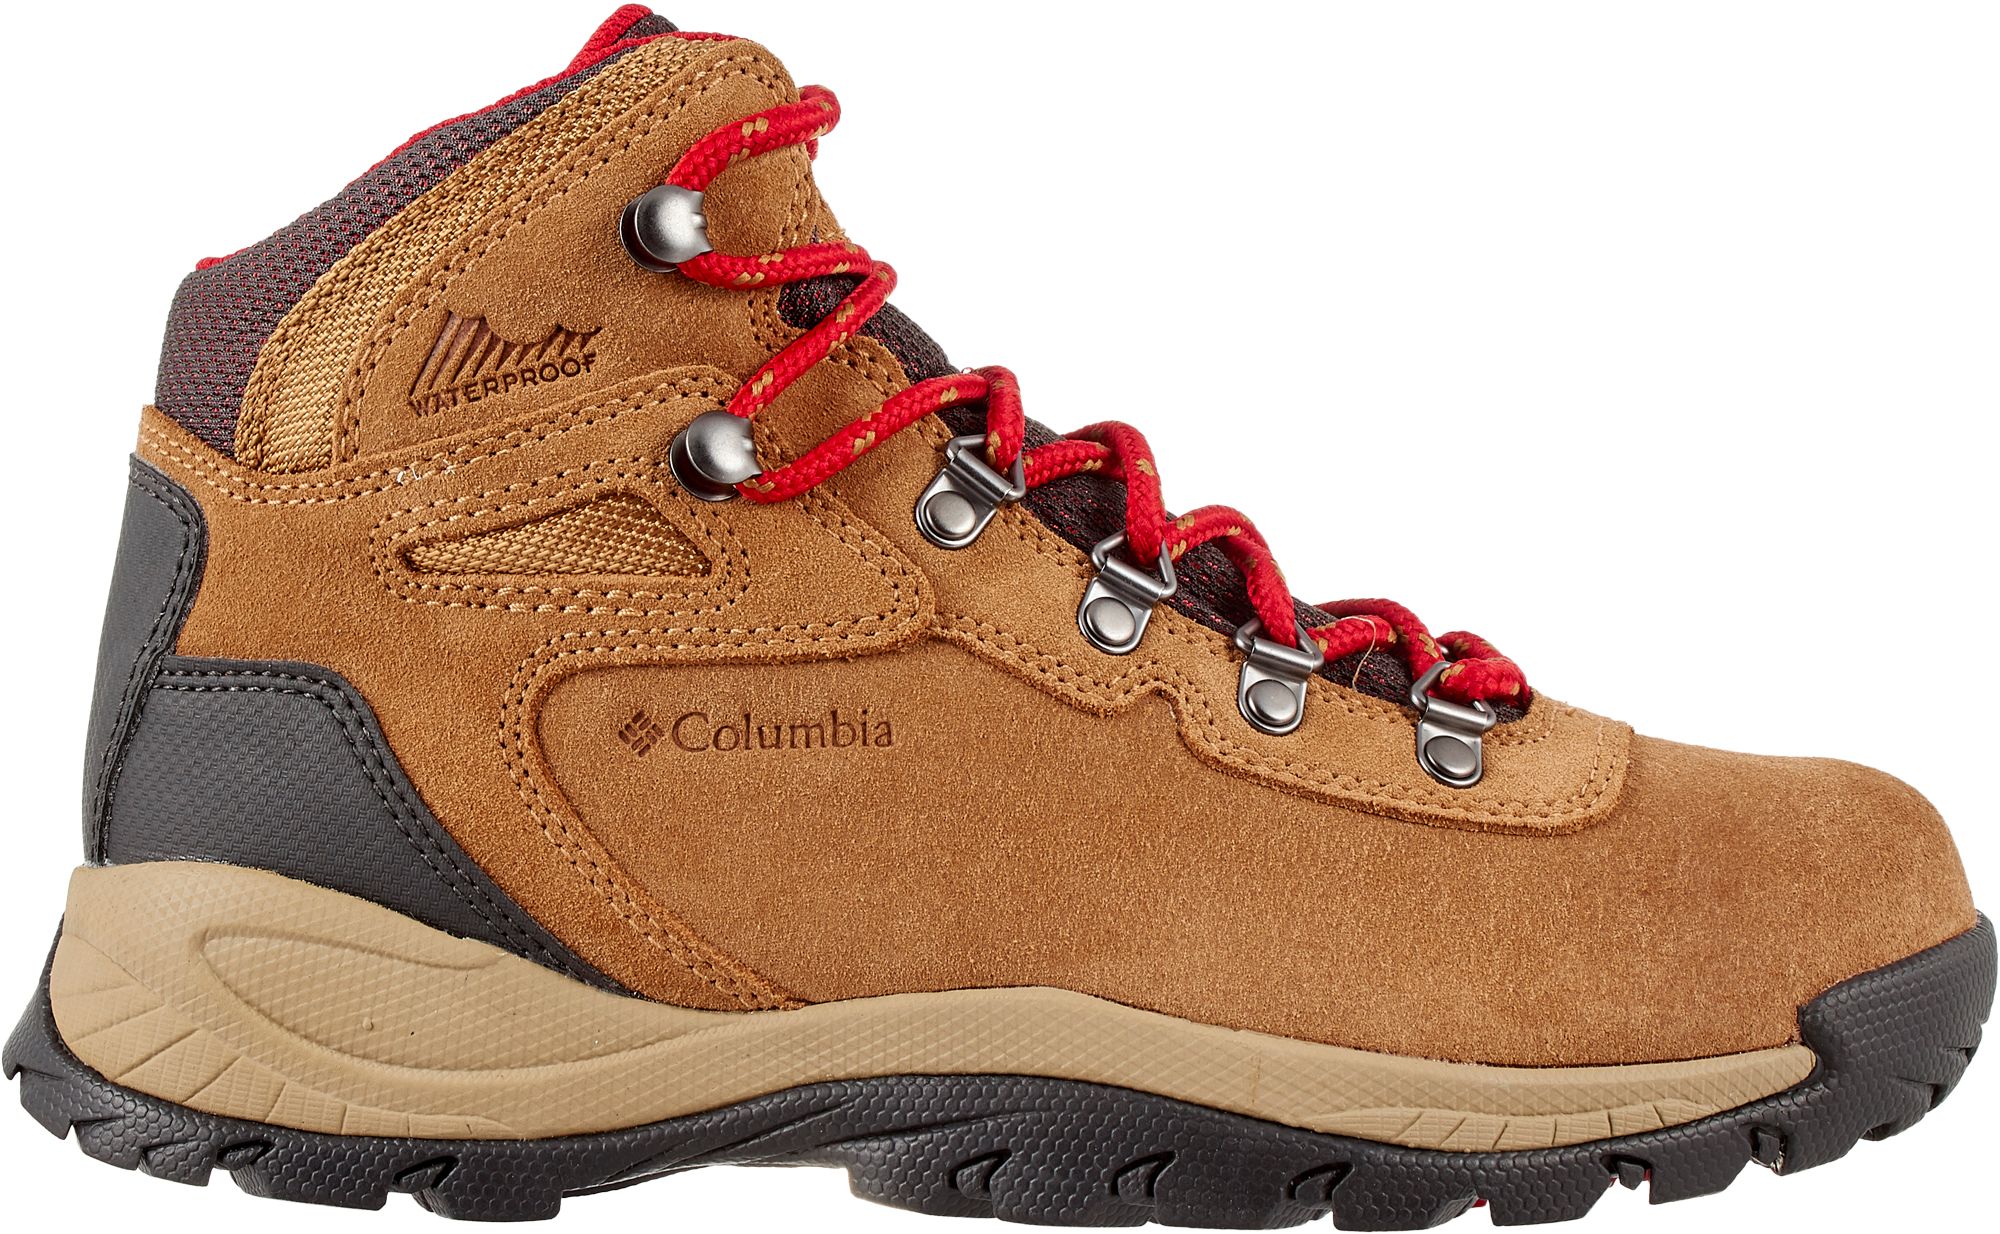 Photos - Trekking Shoes Columbia Women's Newton Ridge Plus Amped Waterproof Hiking Boots, Size 8.5 